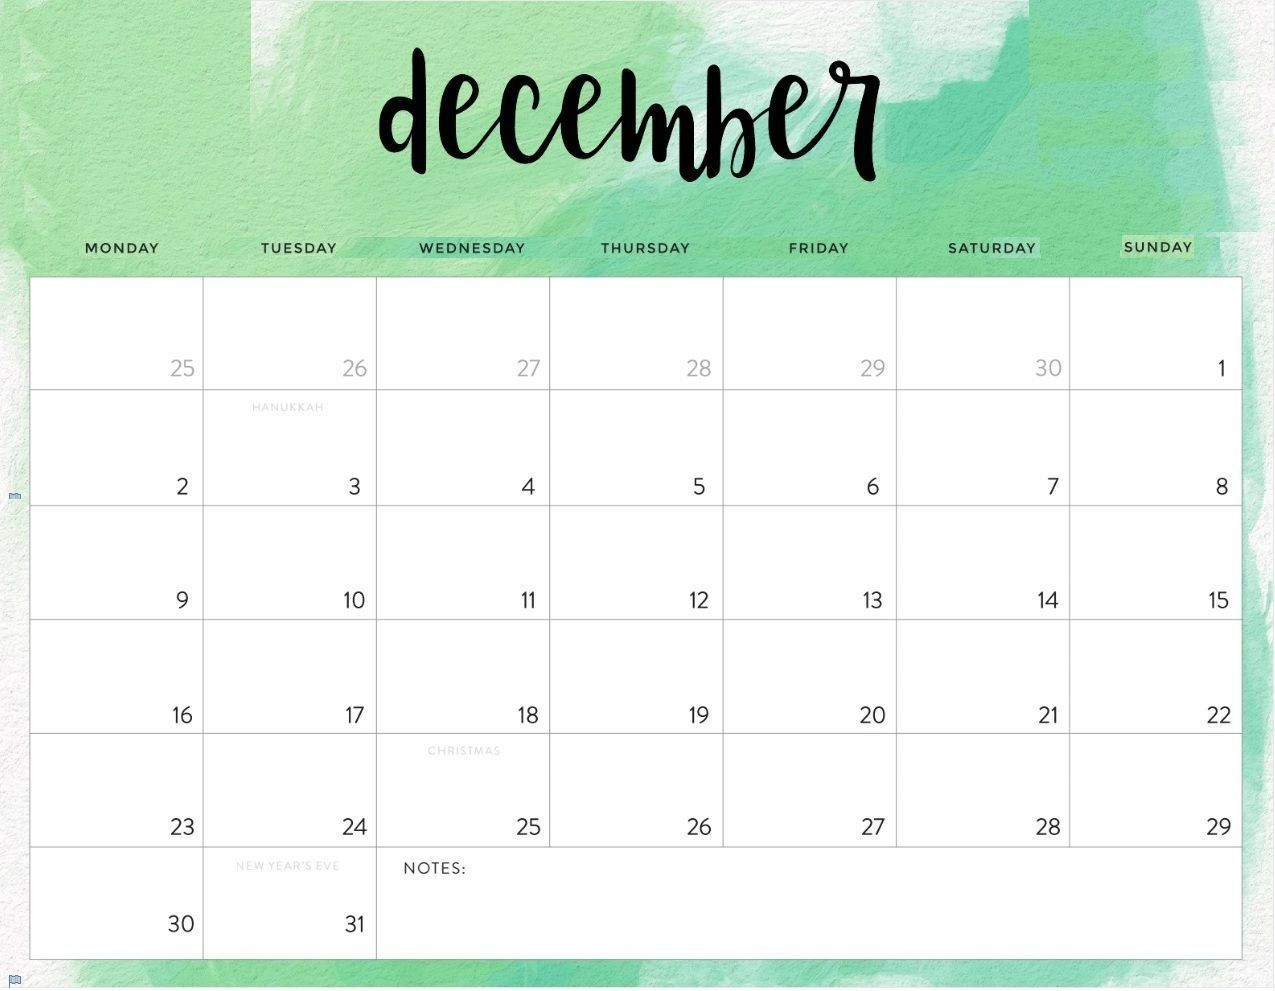 Free Calendar You Can Edit Online | Editable Calendar